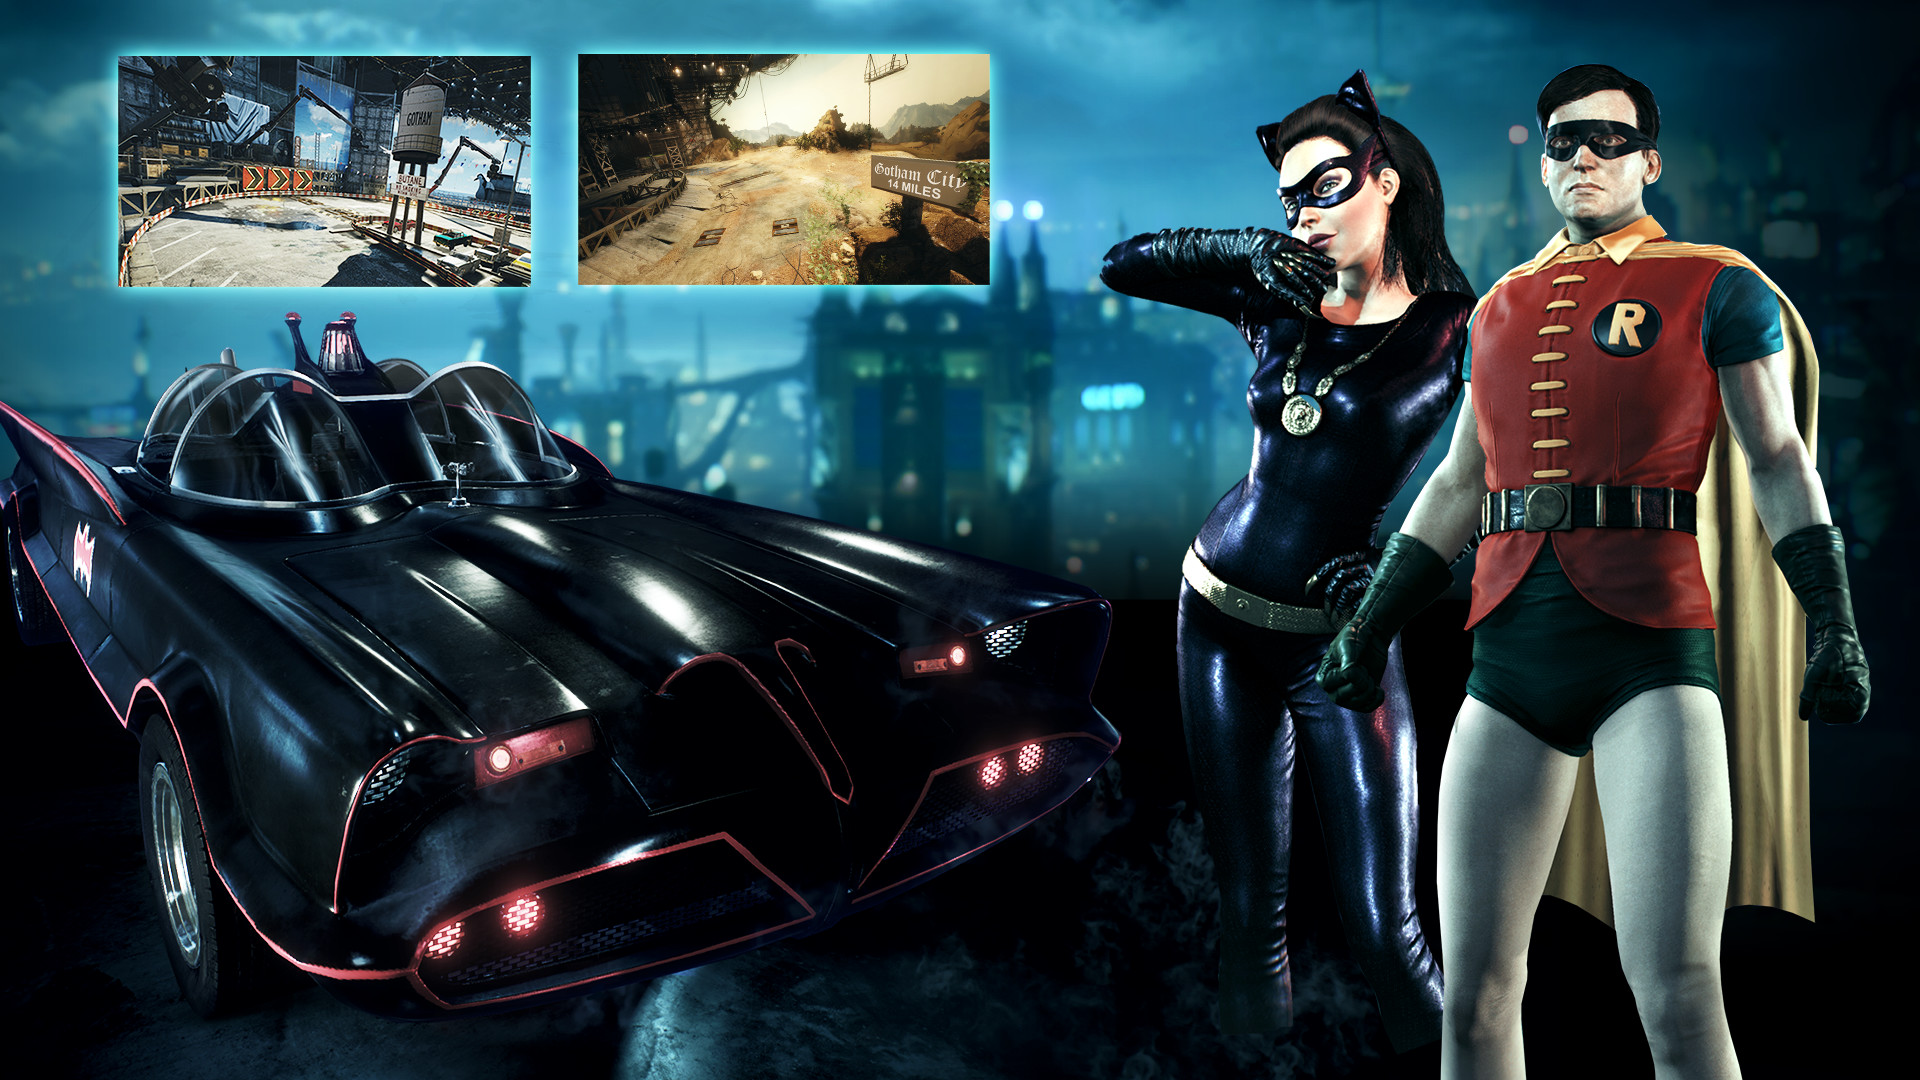 Batman™: Arkham Knight - Robin and Batmobile Skins Pack on Steam